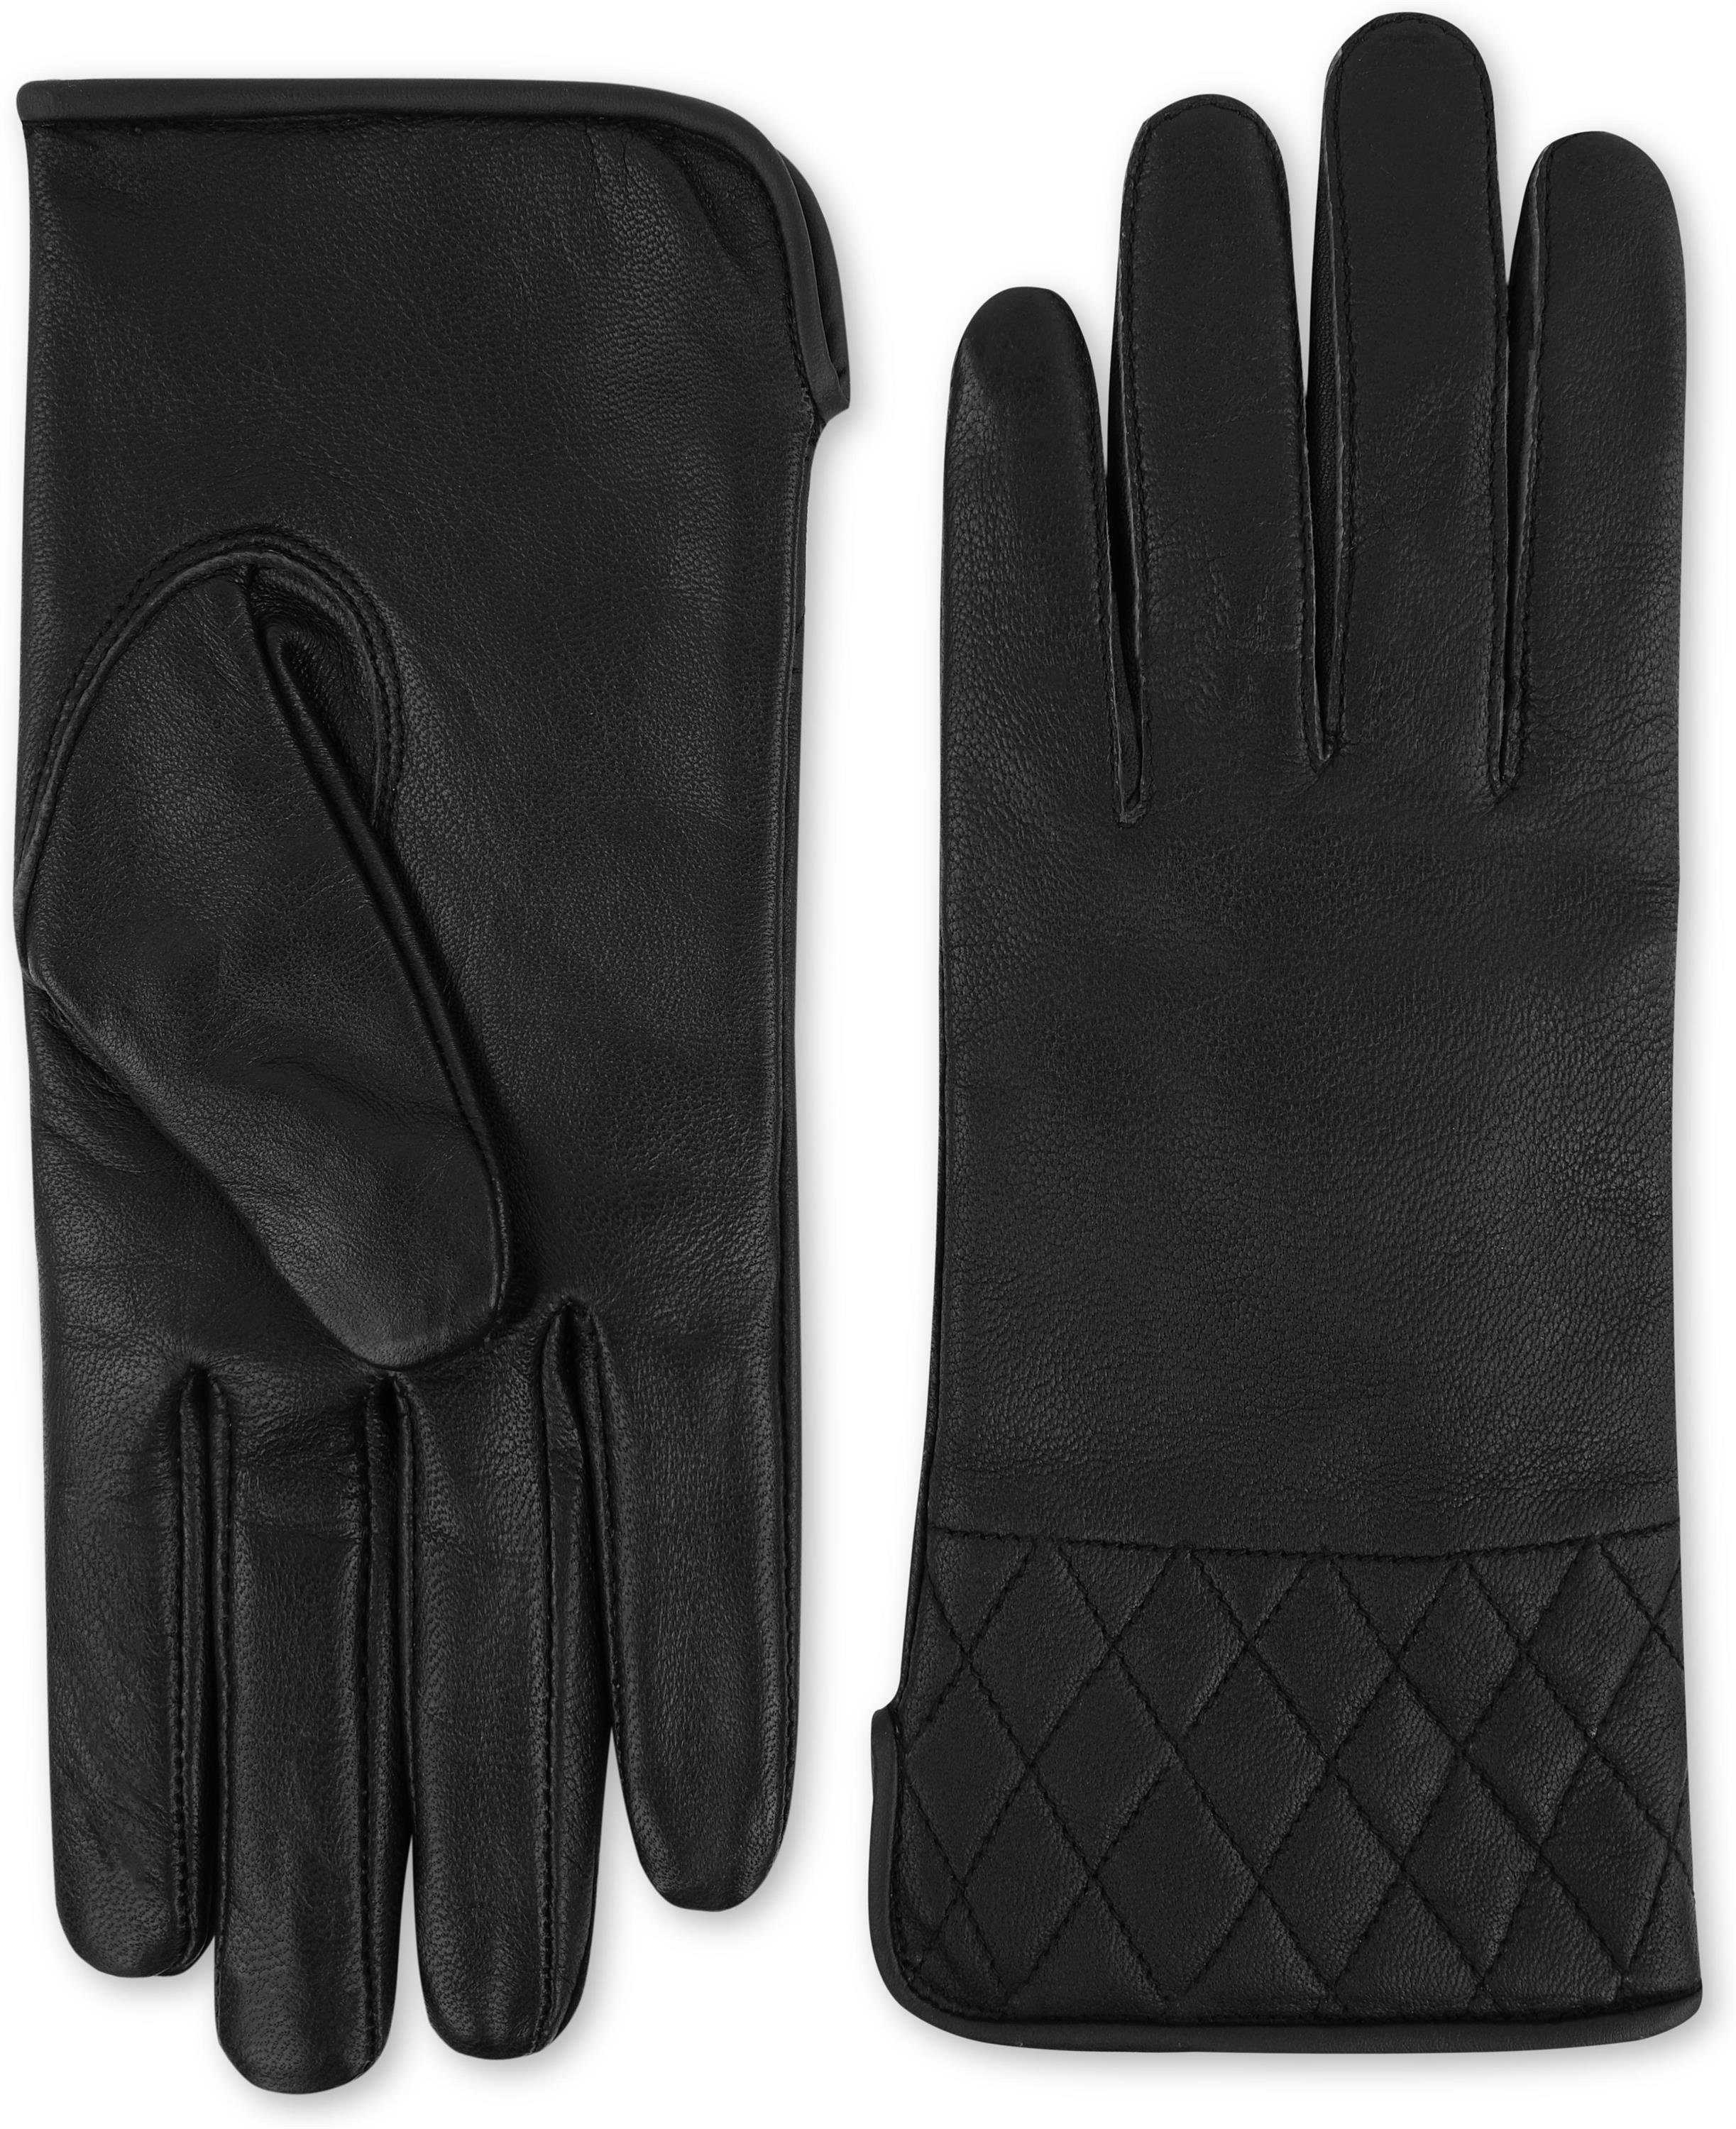 Drammen normani Skihandschuhe Handschuhe EchtLeder Damen Fingerhandschuhe für mit gefüttert Winterhandschuhe Reiner Lederhandschuhe Frauen Wolle